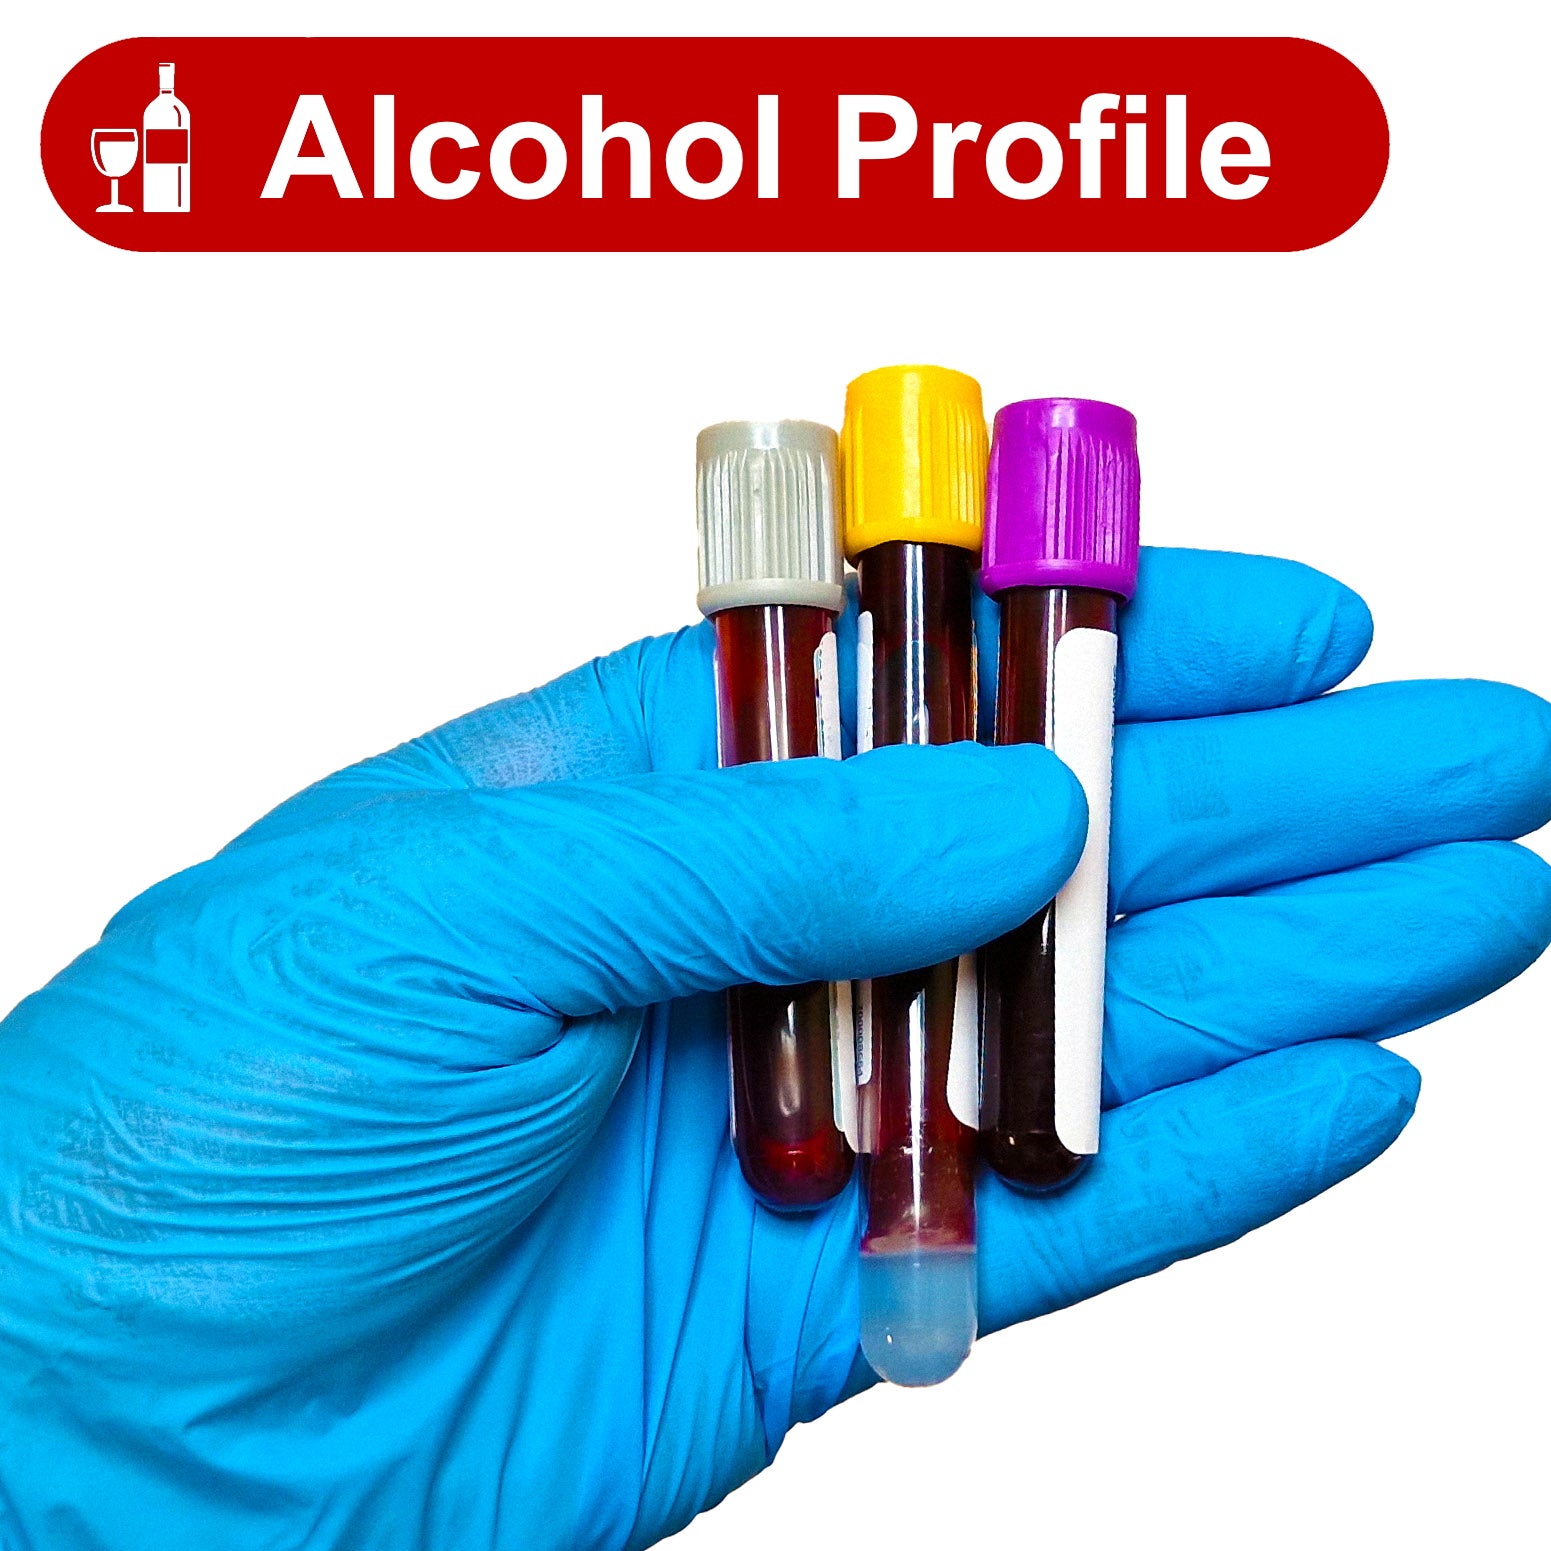 Alcohol profile test